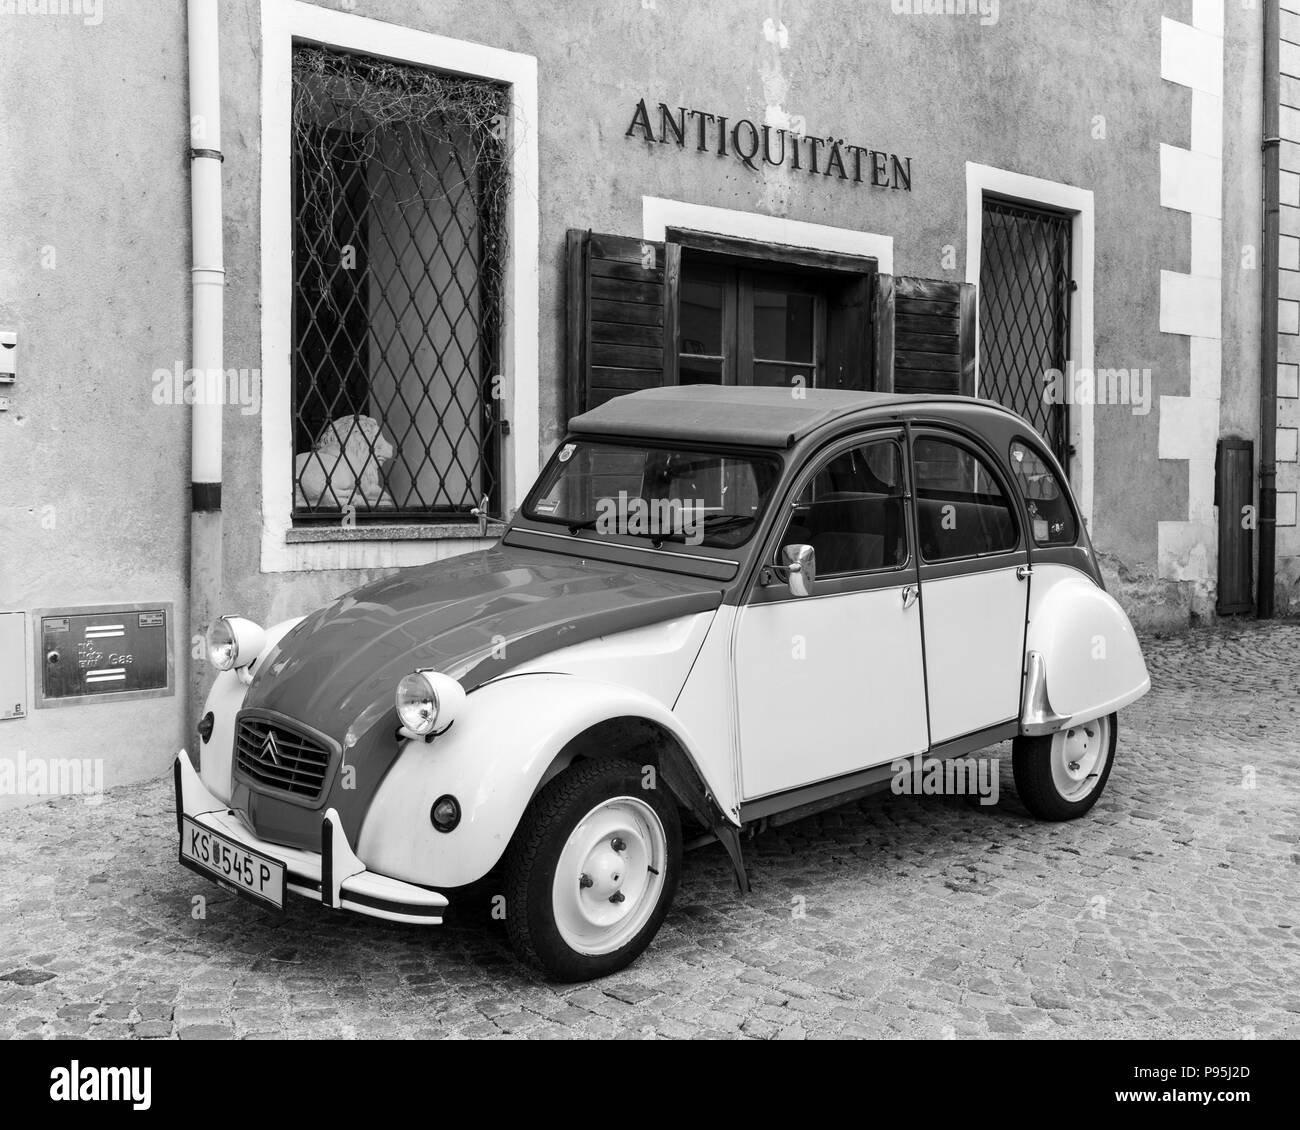 A monochrome picture of a classic Citroën 2CV car underneath an antique shop's sign in Stein an der Donau, Lower Austria Stock Photo